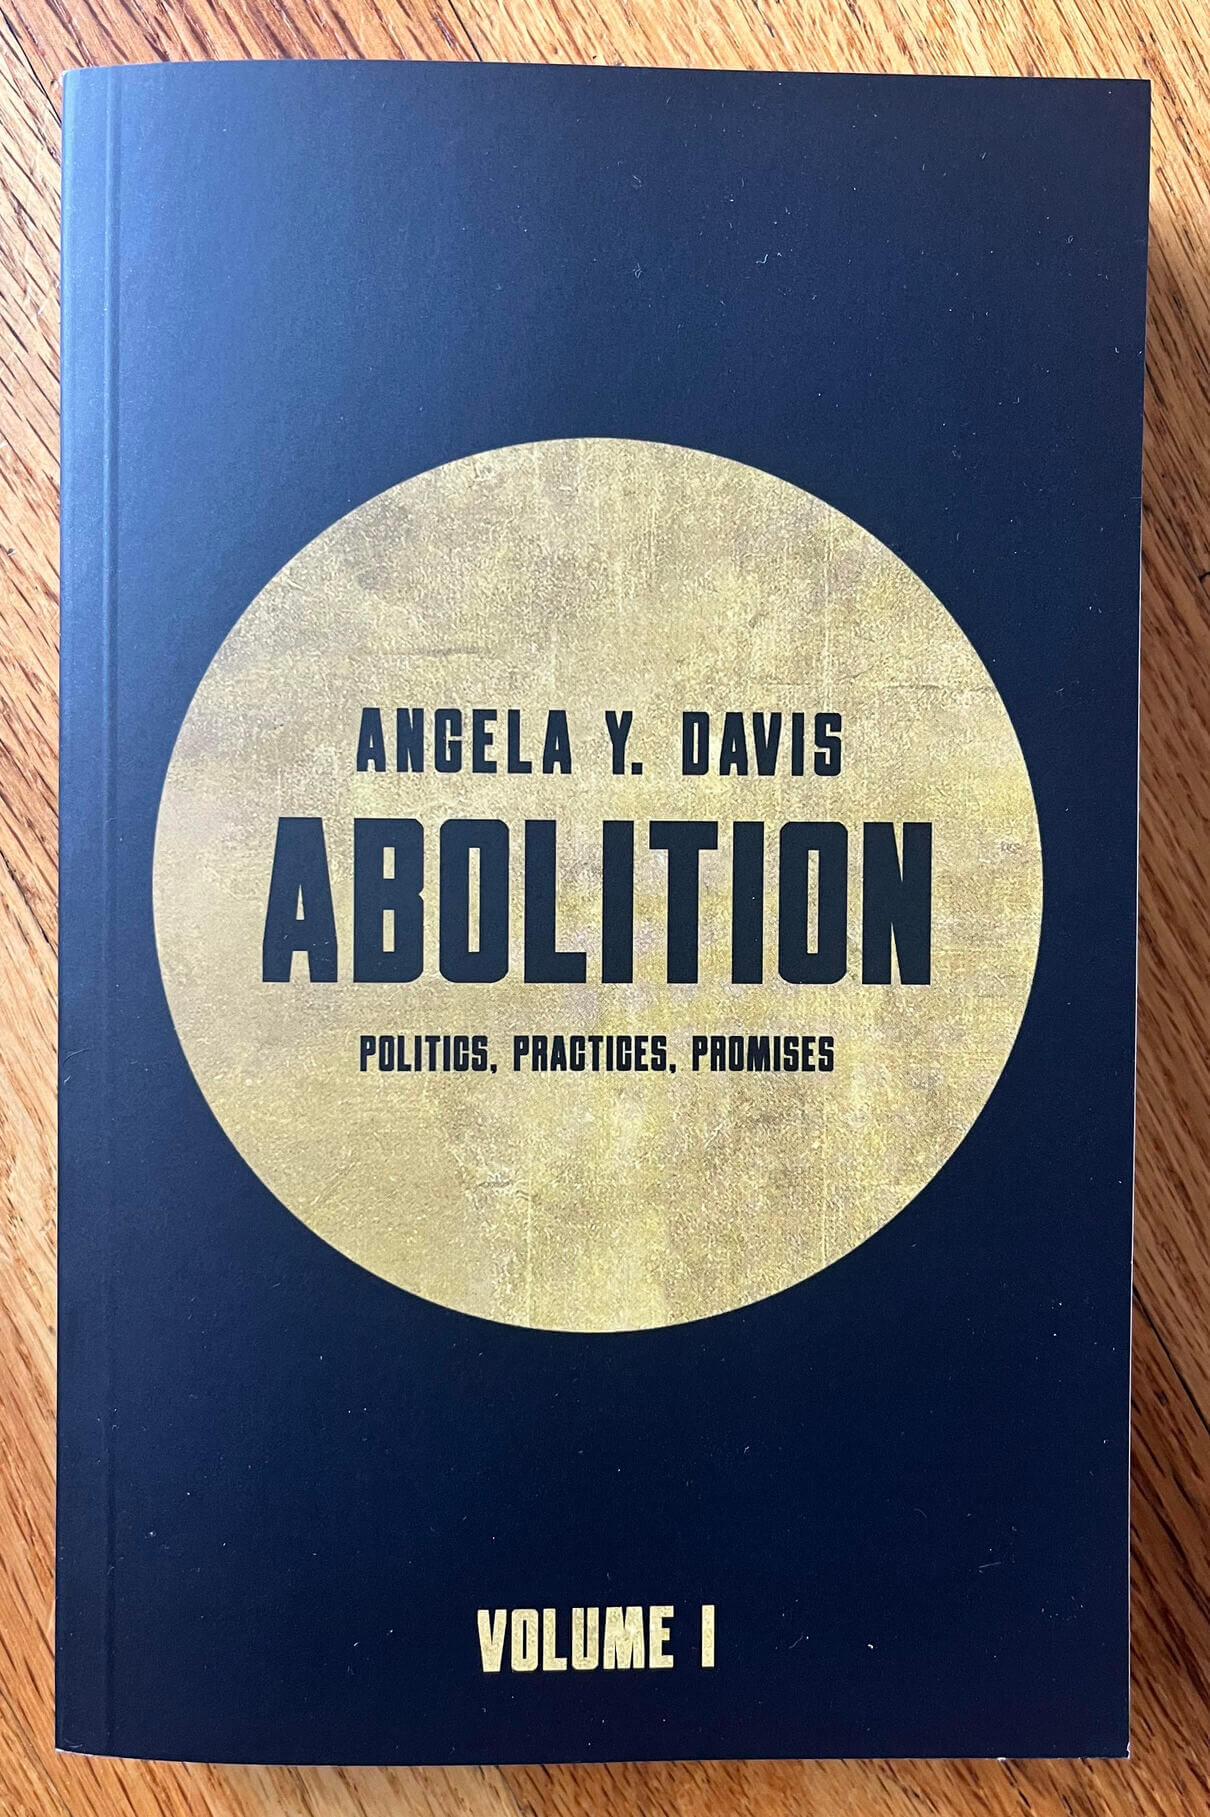 “Abolition: Politics. Practices. Promises. Volume I” by Angela Y. Davis